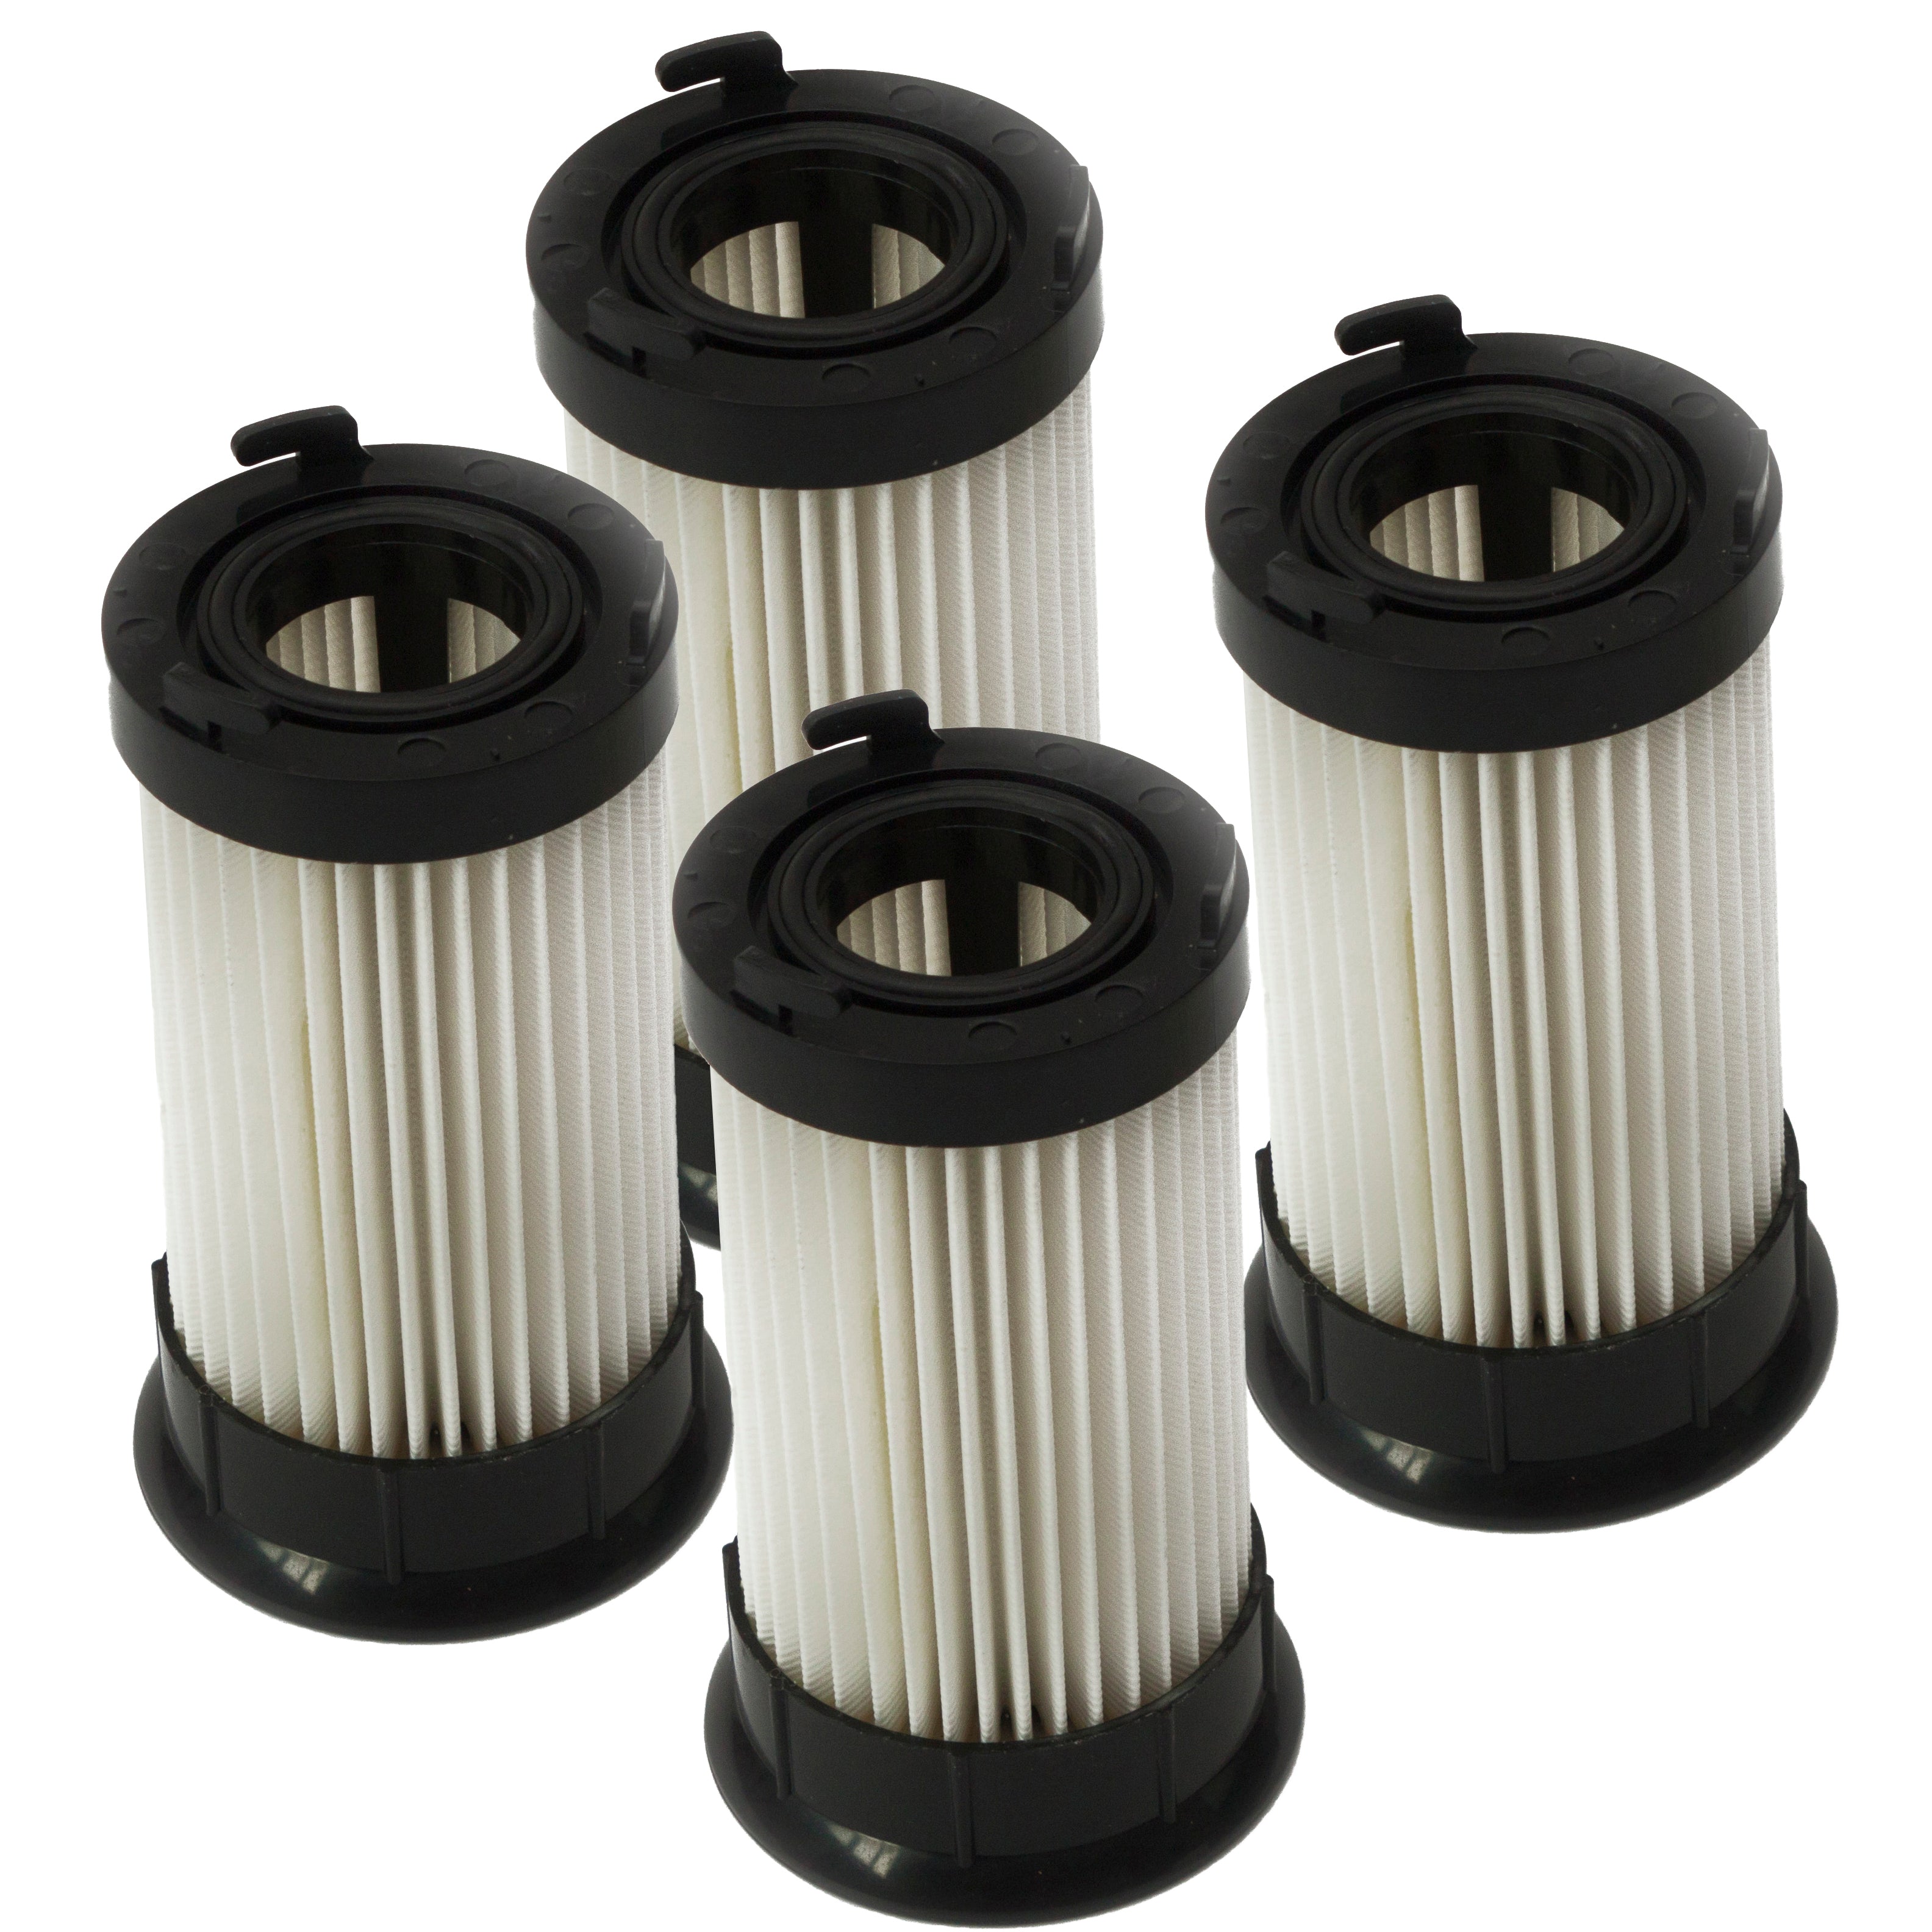 LTWHOME Hepa Filters Suitable for Eureka Vacuum 62396 Dcf10 Dcf14 (Pack of 4)